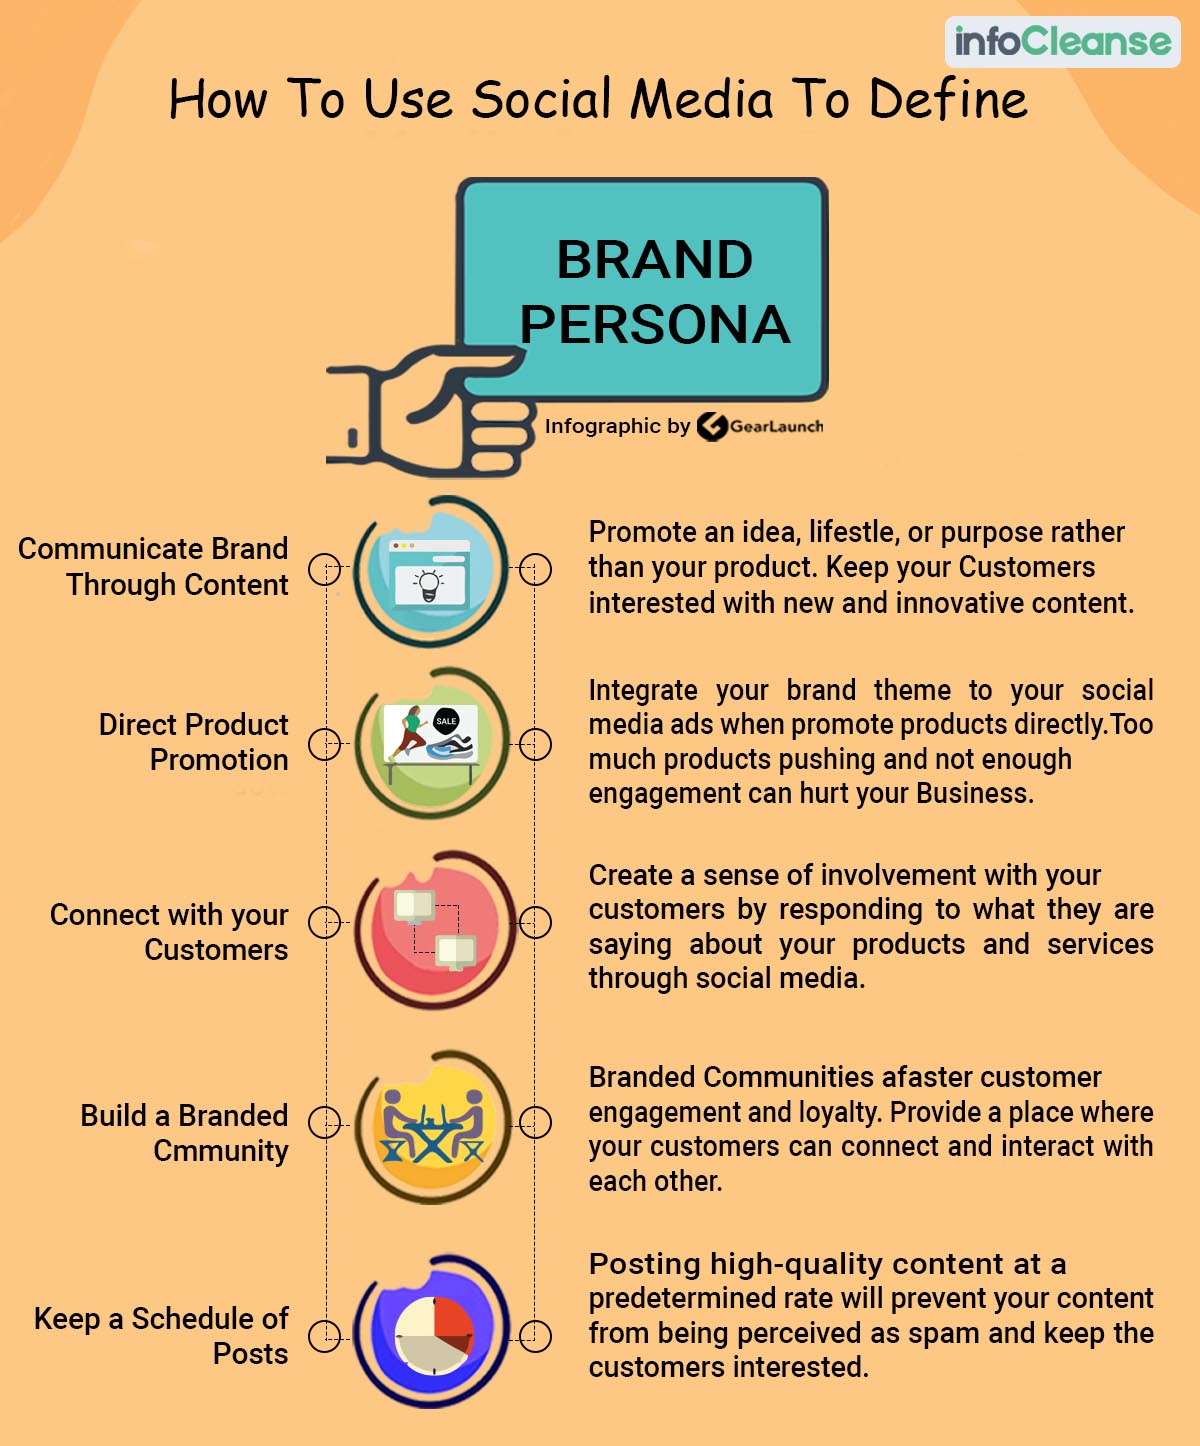 Using Social Media For Brand Persona